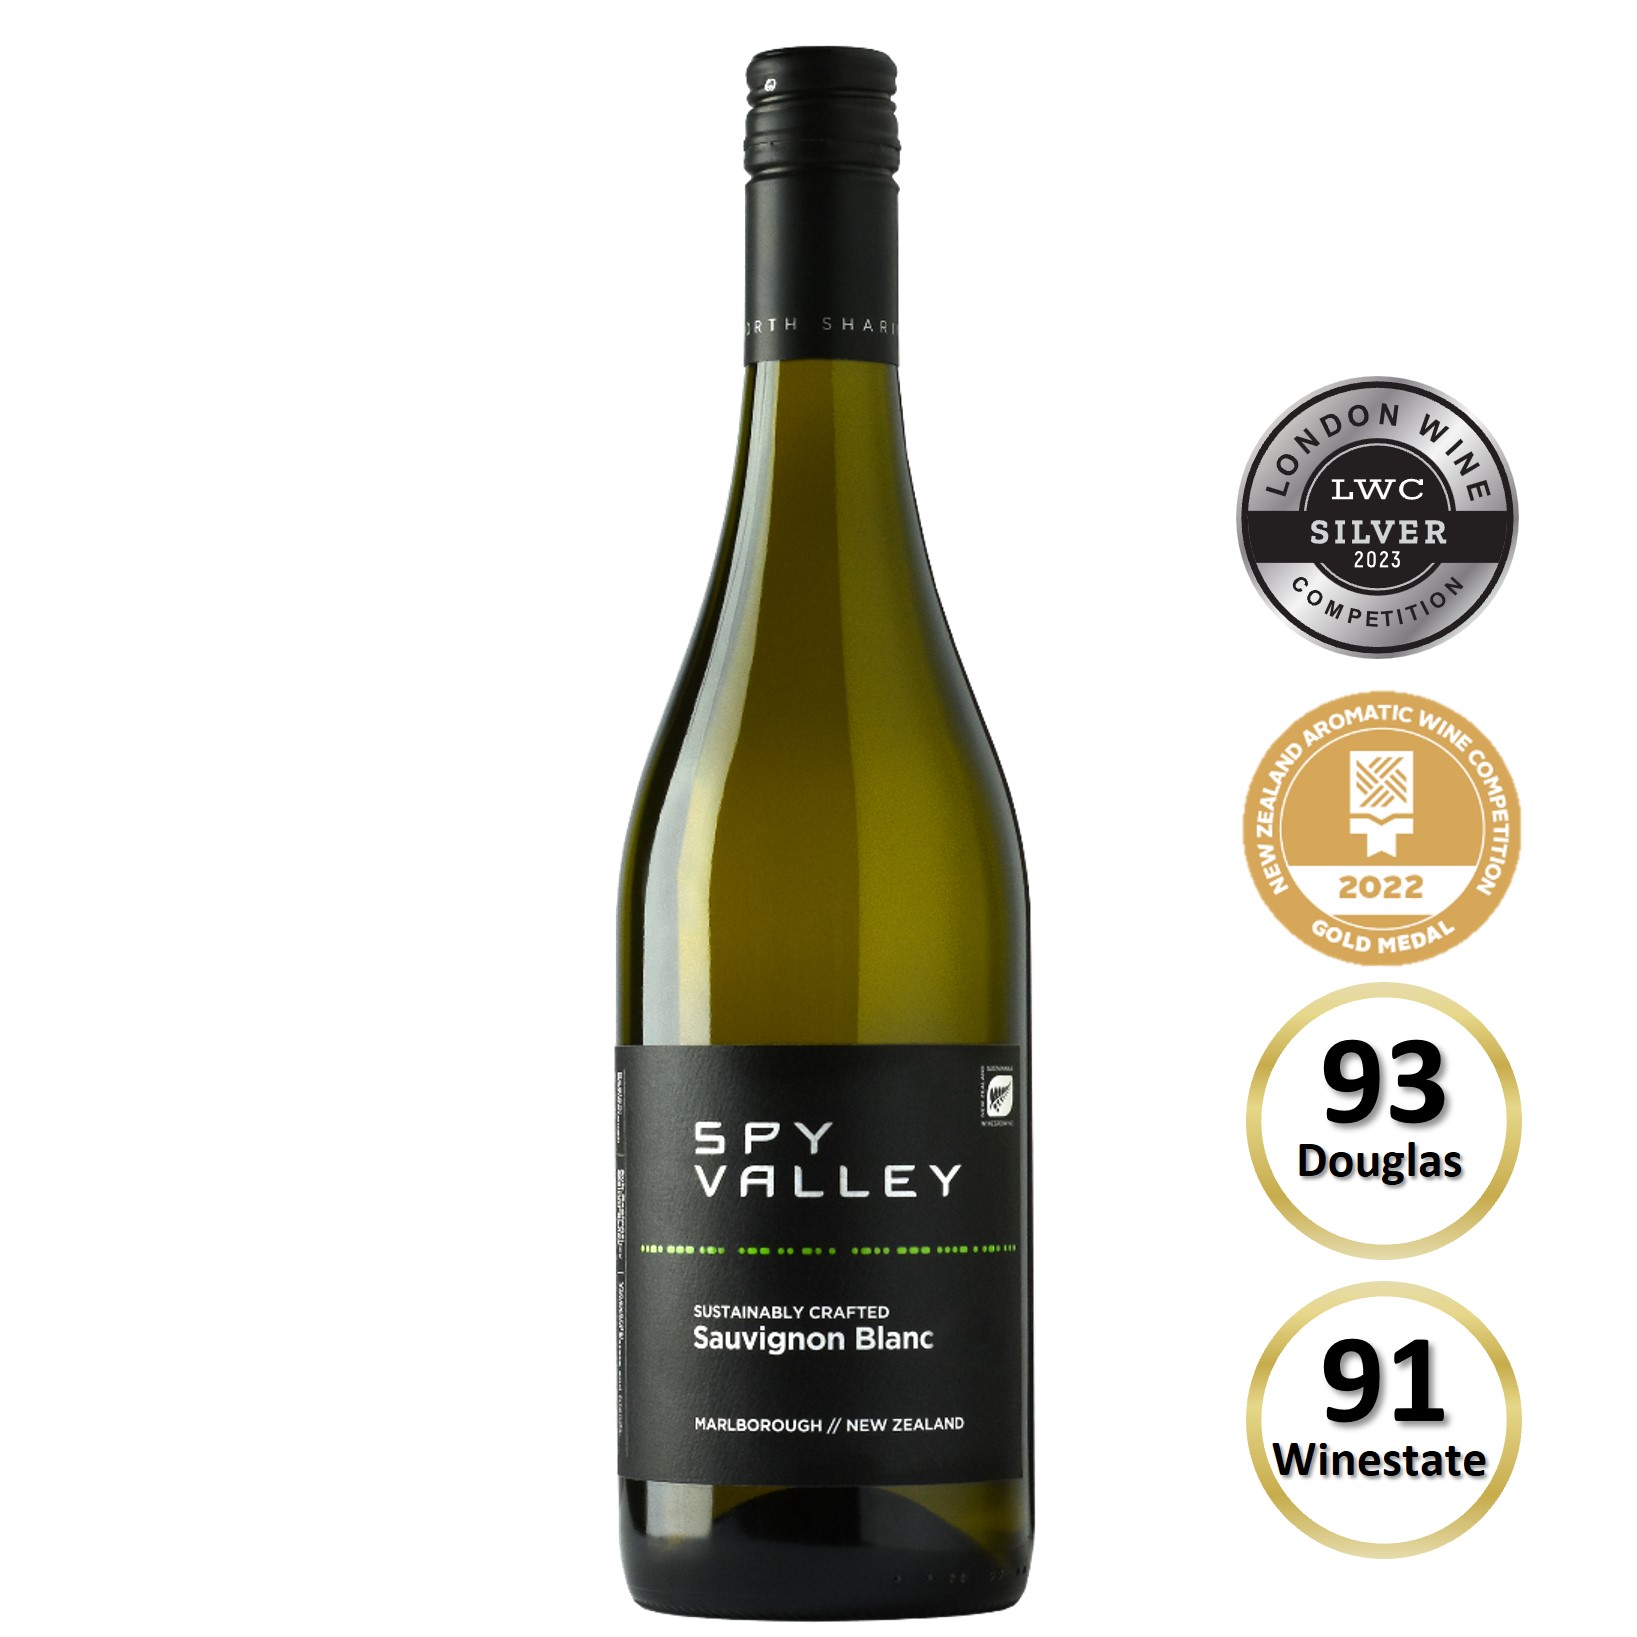 Spy Valley Sauvignon Blanc 2022 - Neuseeland Weinboutique